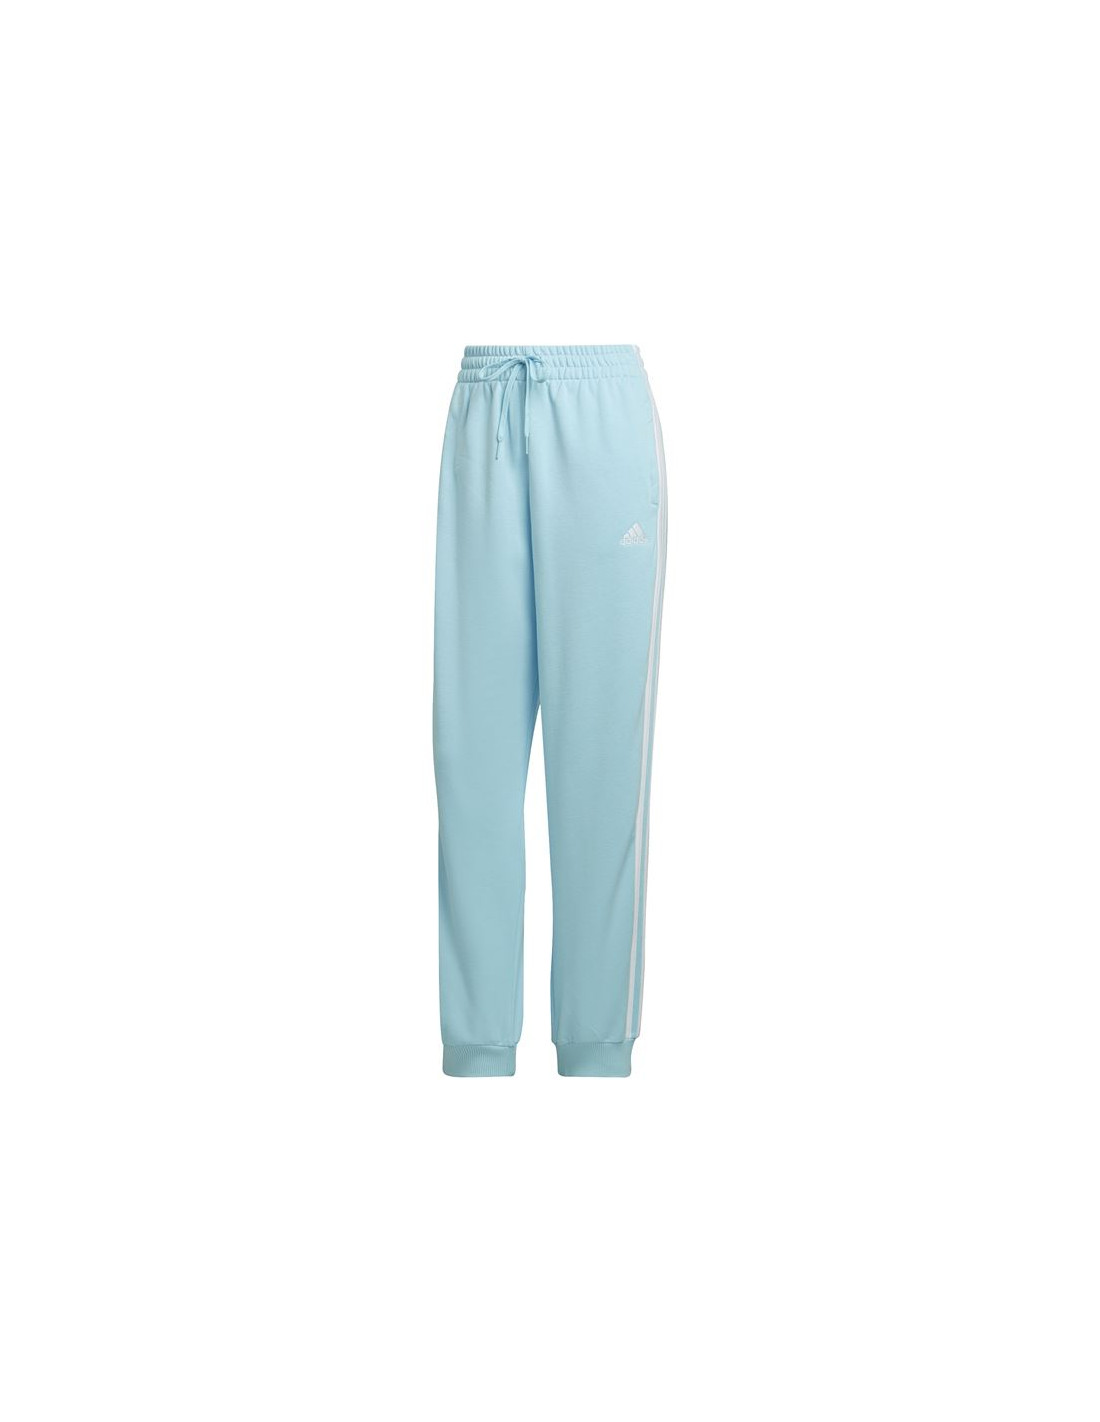 Pantalones adidas essentials studio lounge mujer blue